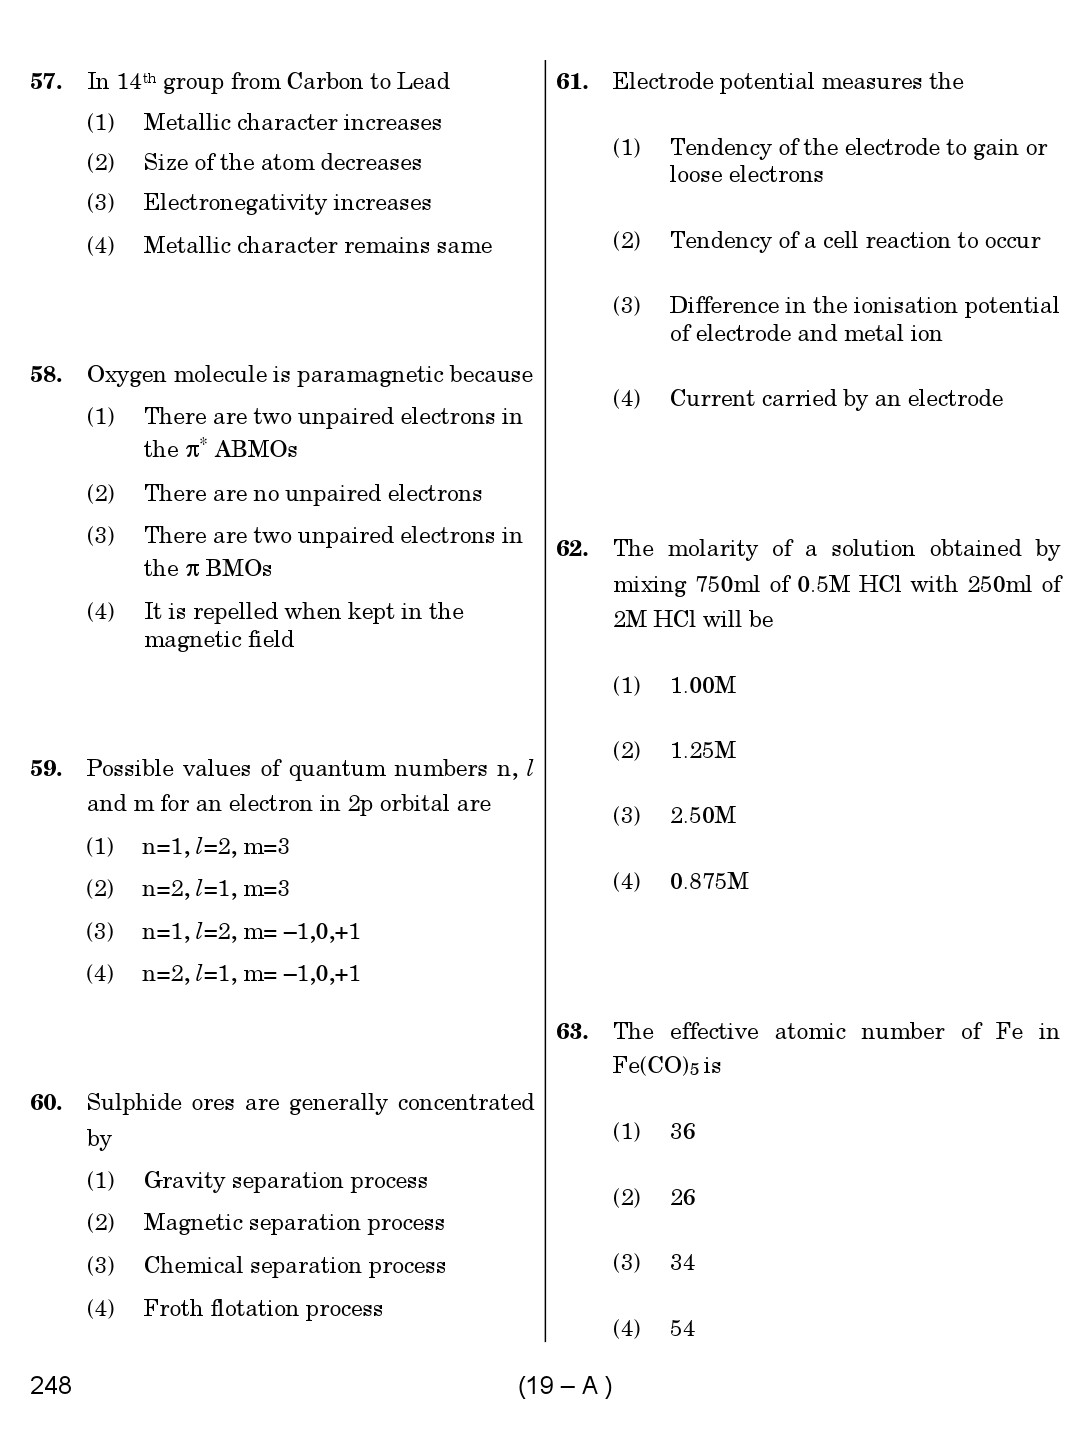 Karnataka PSC Laboratory Assistant Exam Sample Question Paper 19